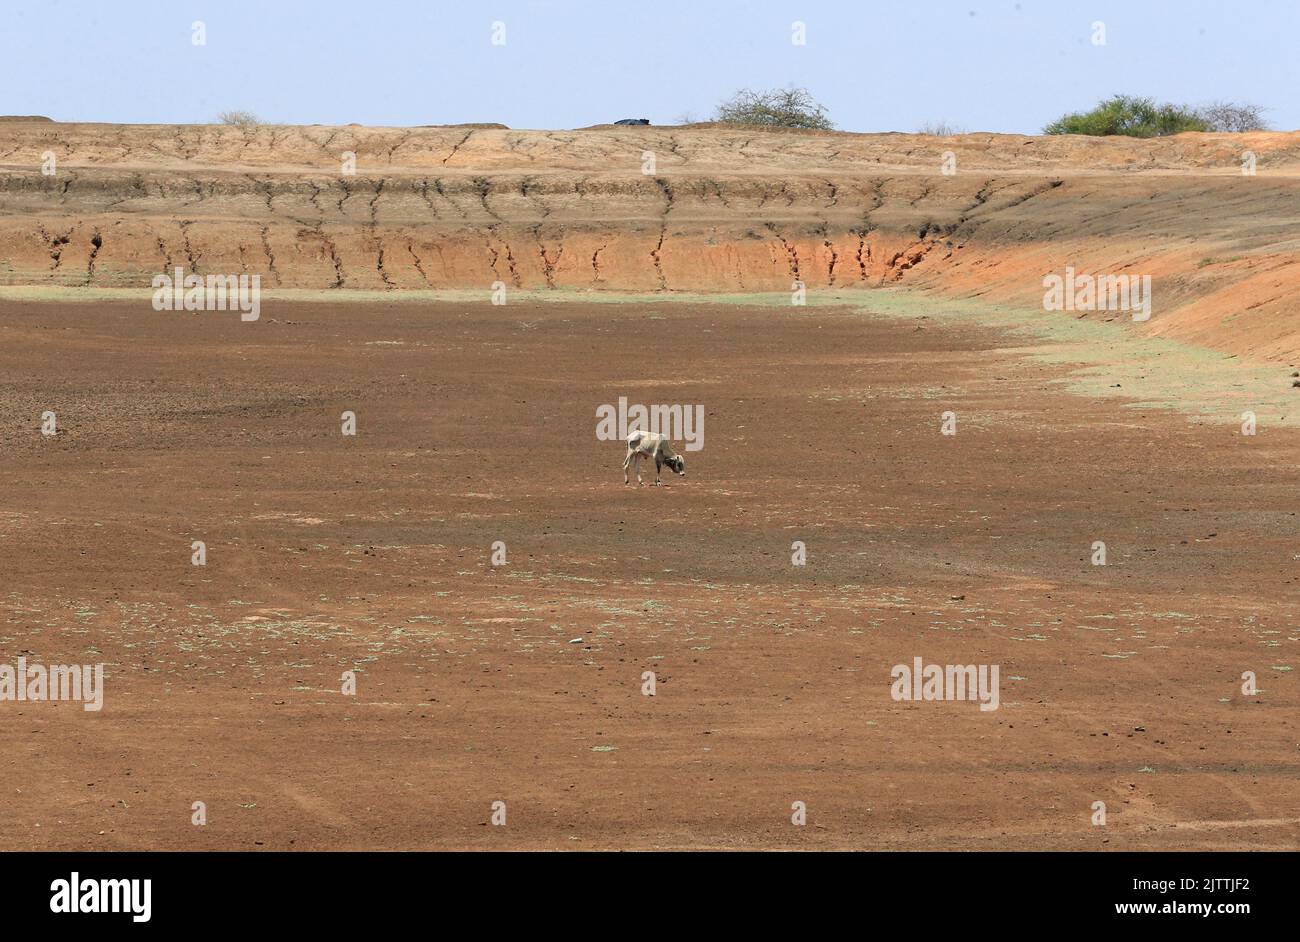 A cow walks in a dried Eresteno water pan project following a prolonged drought near the Kenya-Ethiopia border in Eresteno village along the Wajir- Mandera border in Mandera region, Kenya, September 1, 2022. REUTERS/Thomas Mukoya Stock Photo